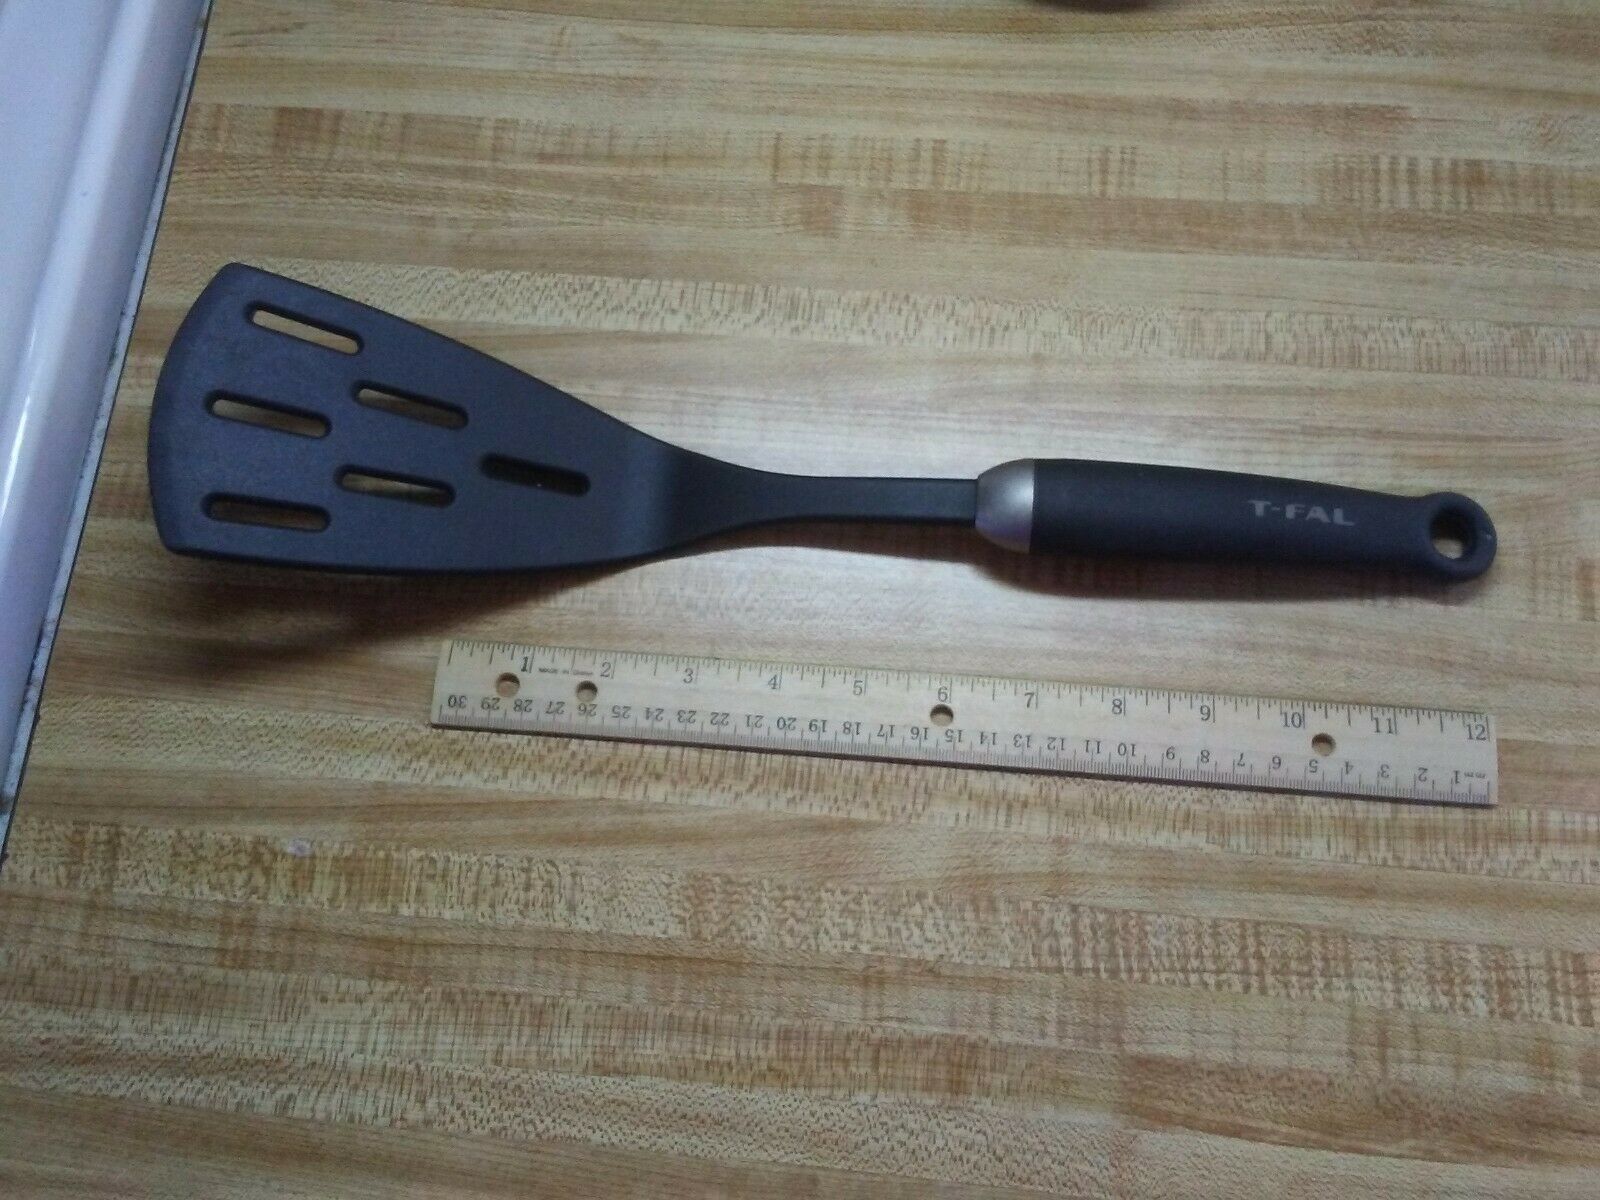 T-Fal spatula - $28.49